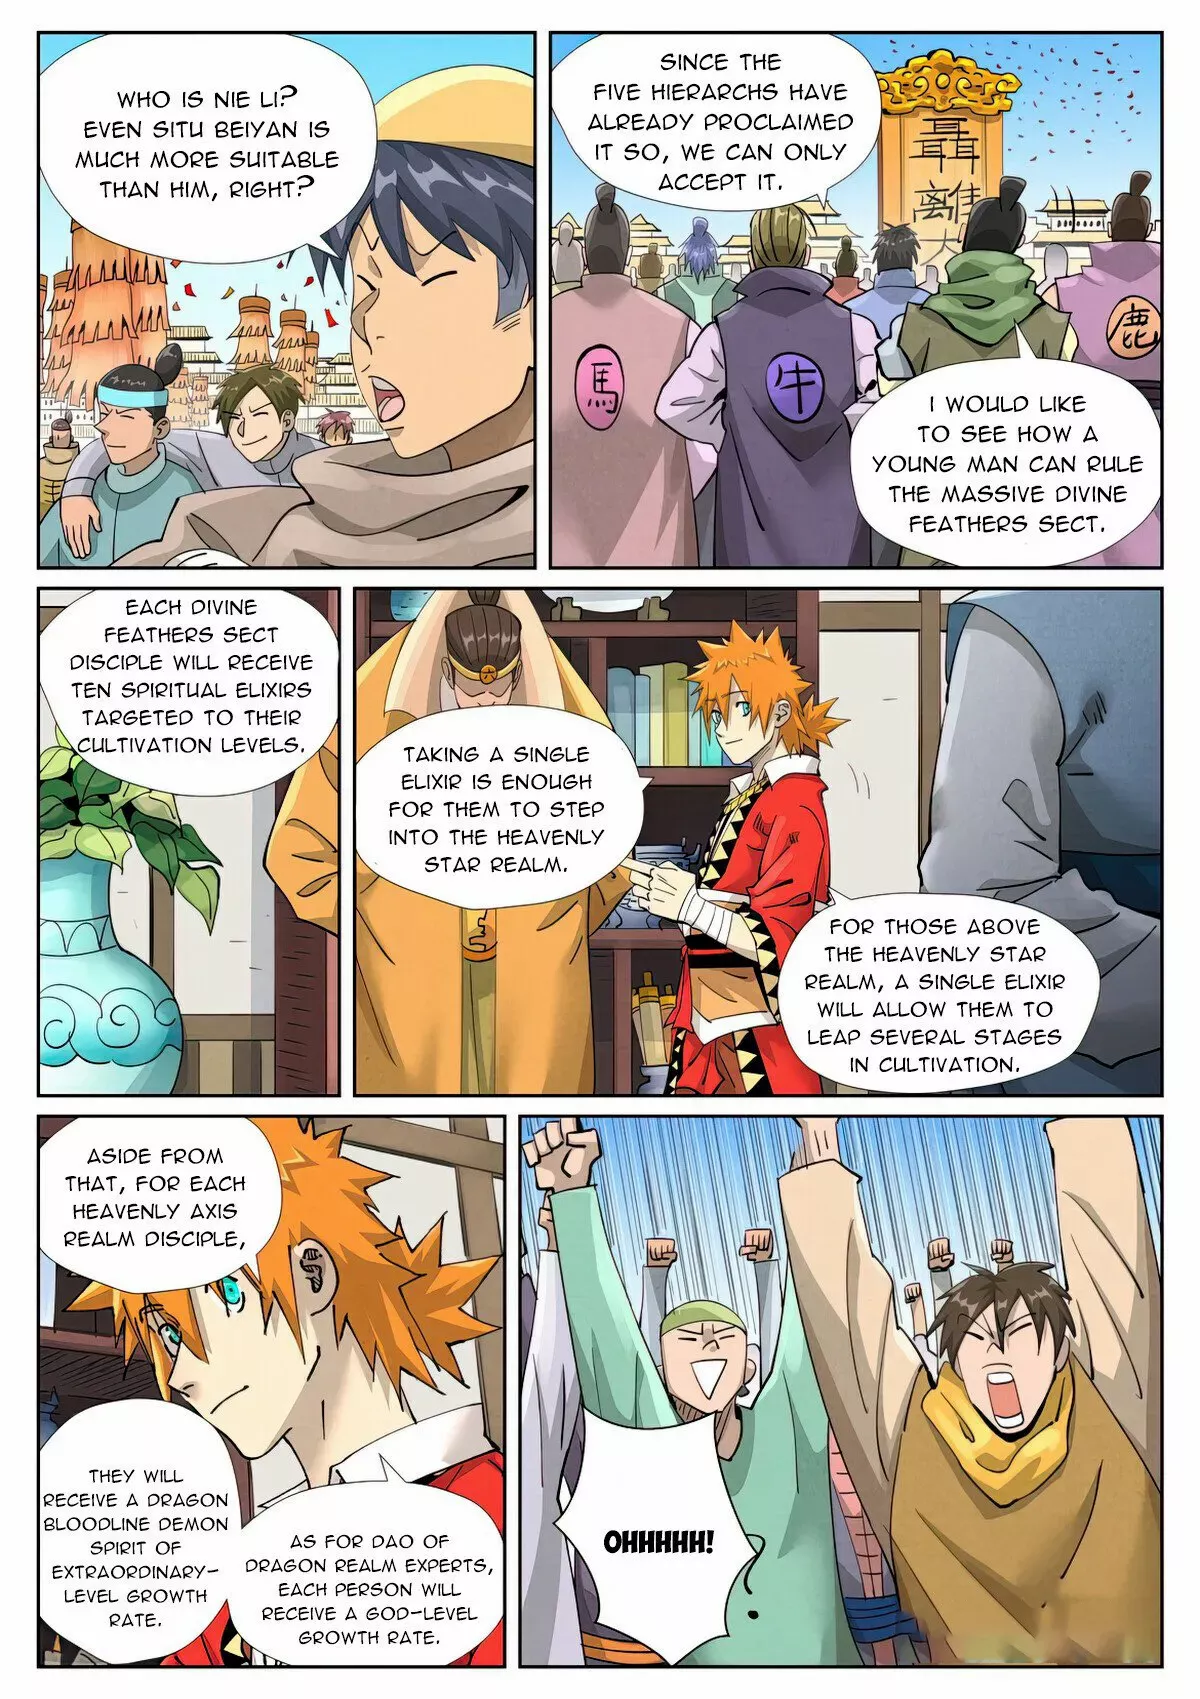 Tales Of Demons And Gods Chapter 429.1 page 3 - Mangakakalot